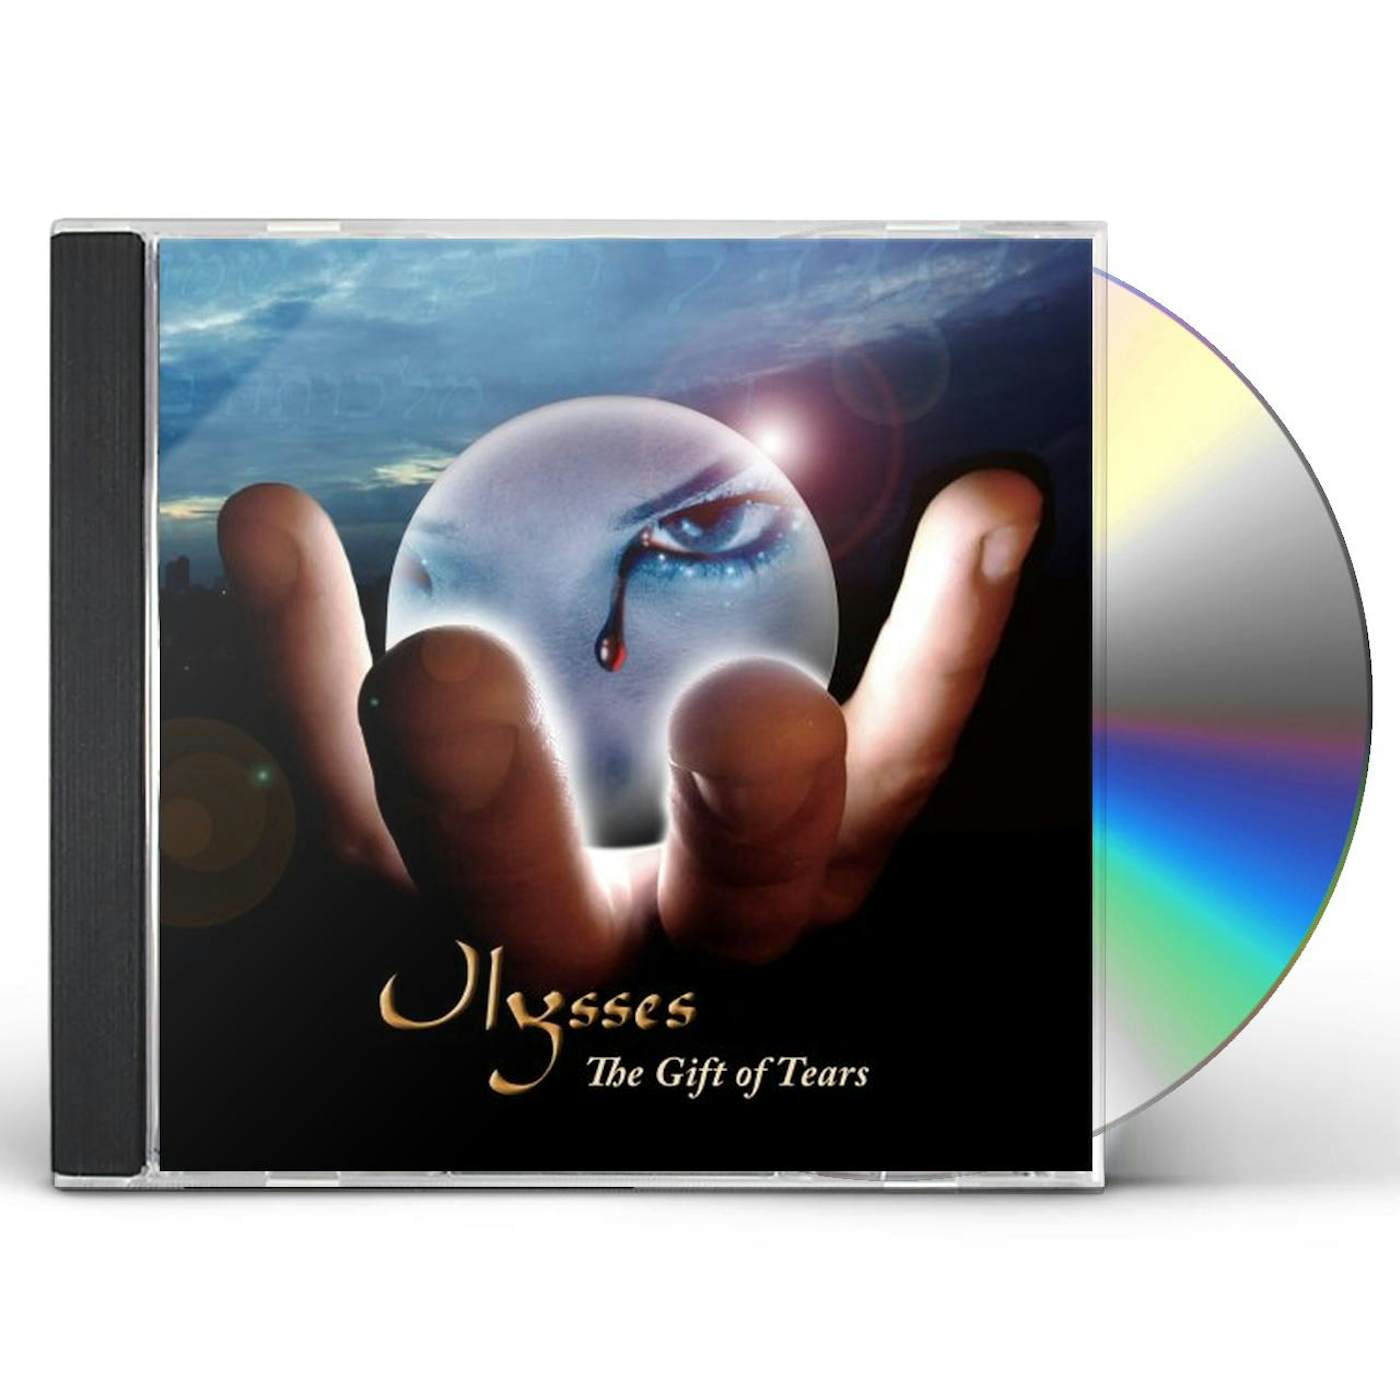 ULYSSES GIFT OF TEARS CD